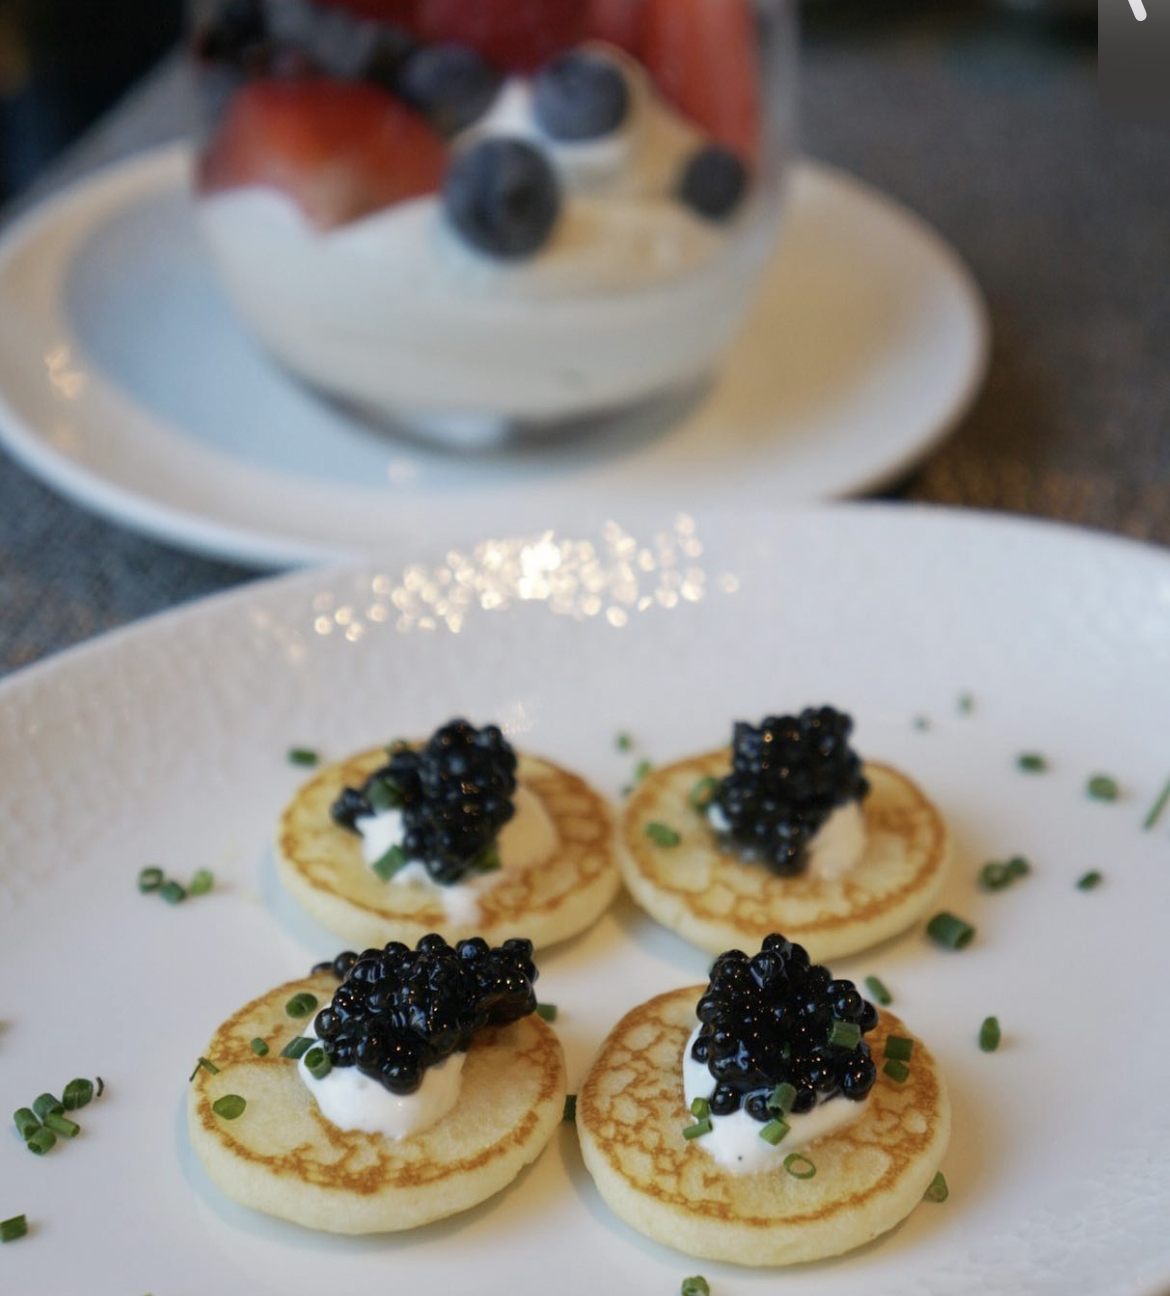 How to Serve Caviar - 5 Ways to Eat Caviar